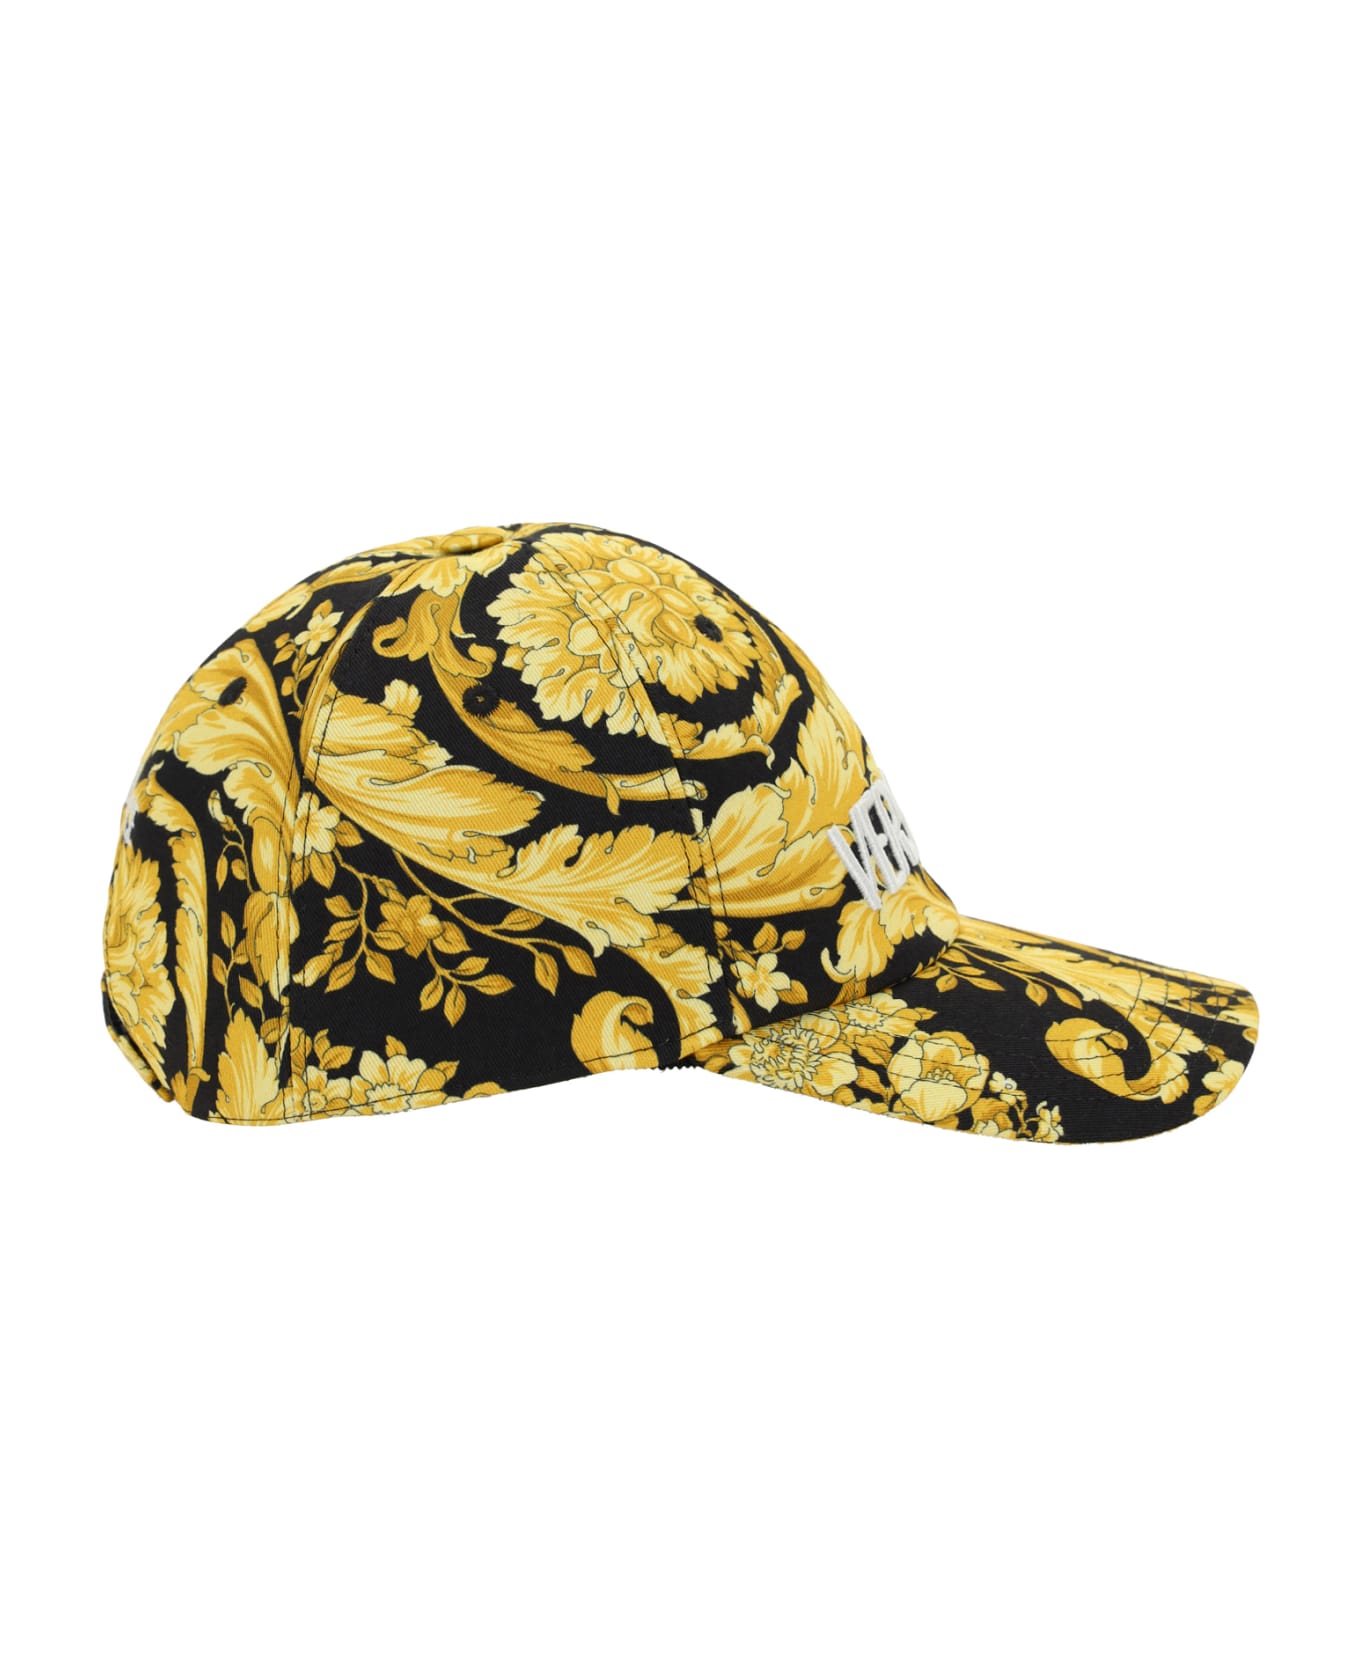 Versace Baseball Cap - Black/gold/black 帽子